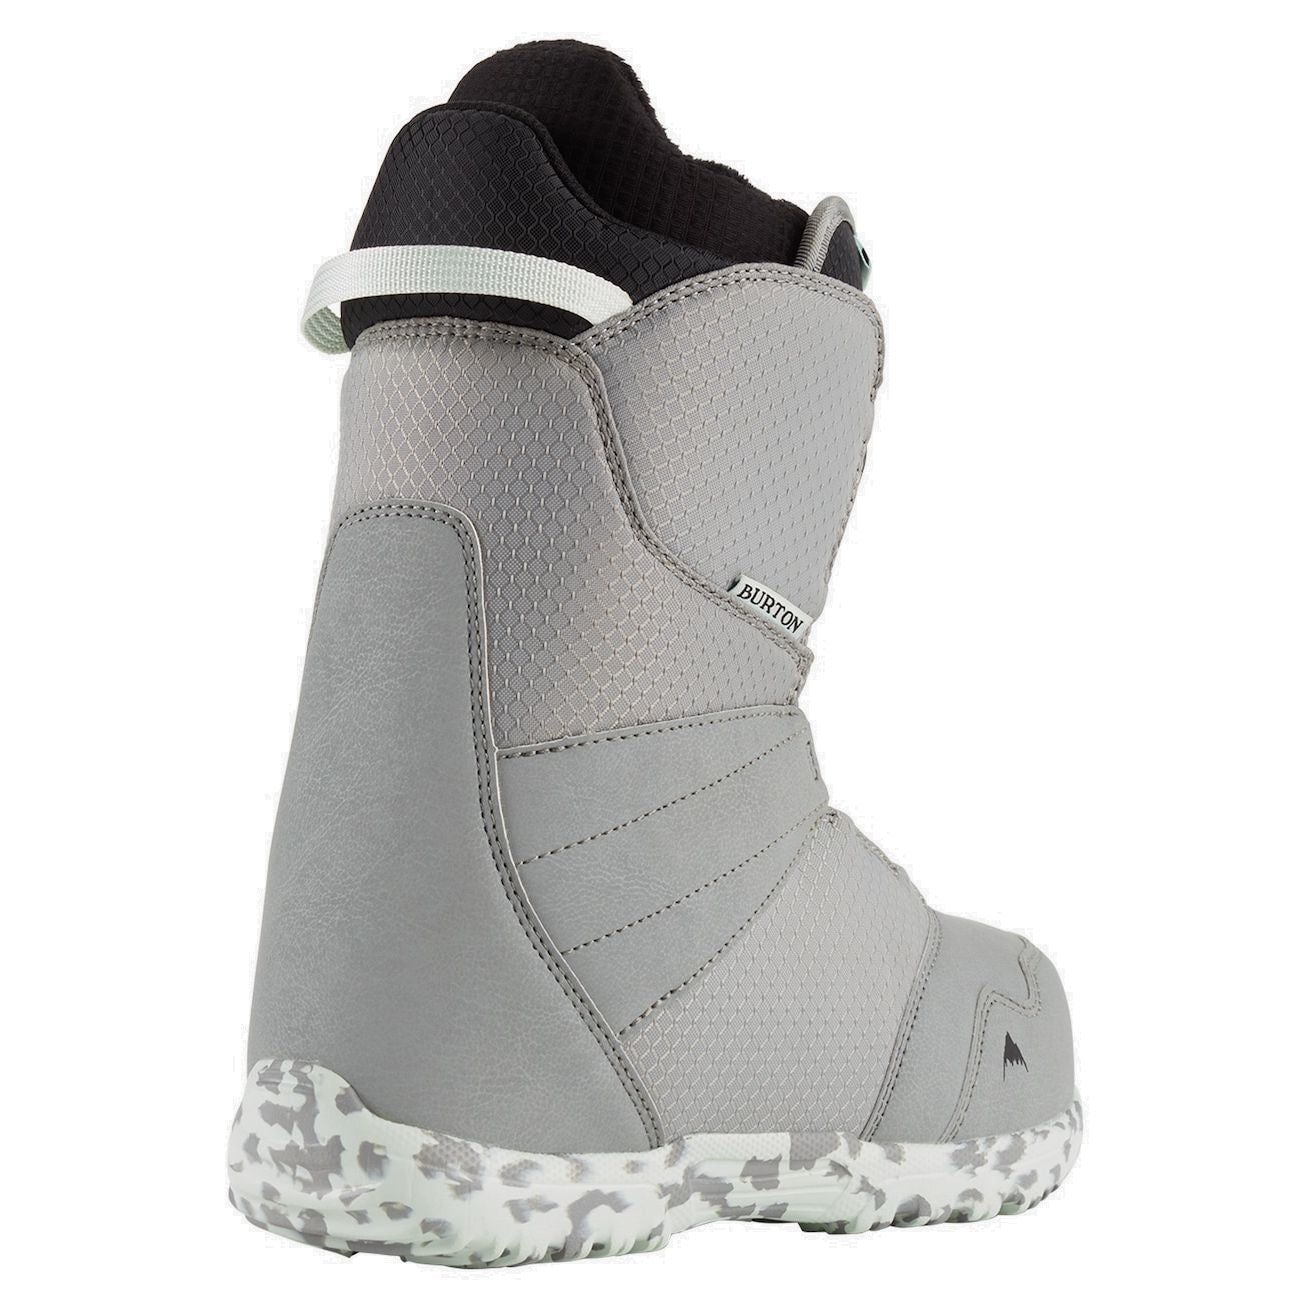 Kids' Burton Zipline BOA Snowboard Boots Gray/Neo-Mint Snowboard Boots